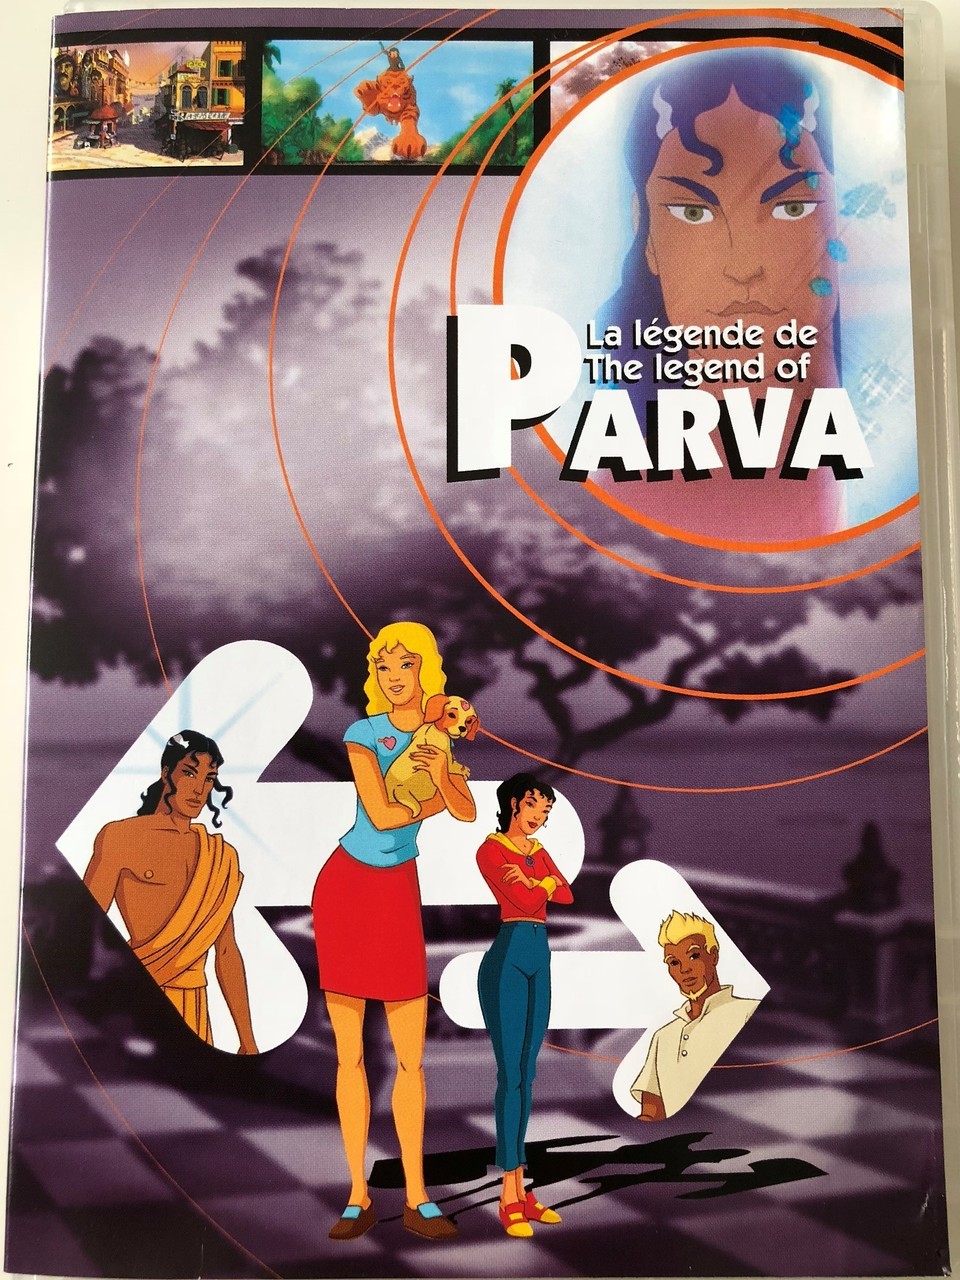 La légende de Parva DVD 2003 The legend of Parva / Directed by Jean Cubaud  / French - Italian Animated Movie - bibleinmylanguage